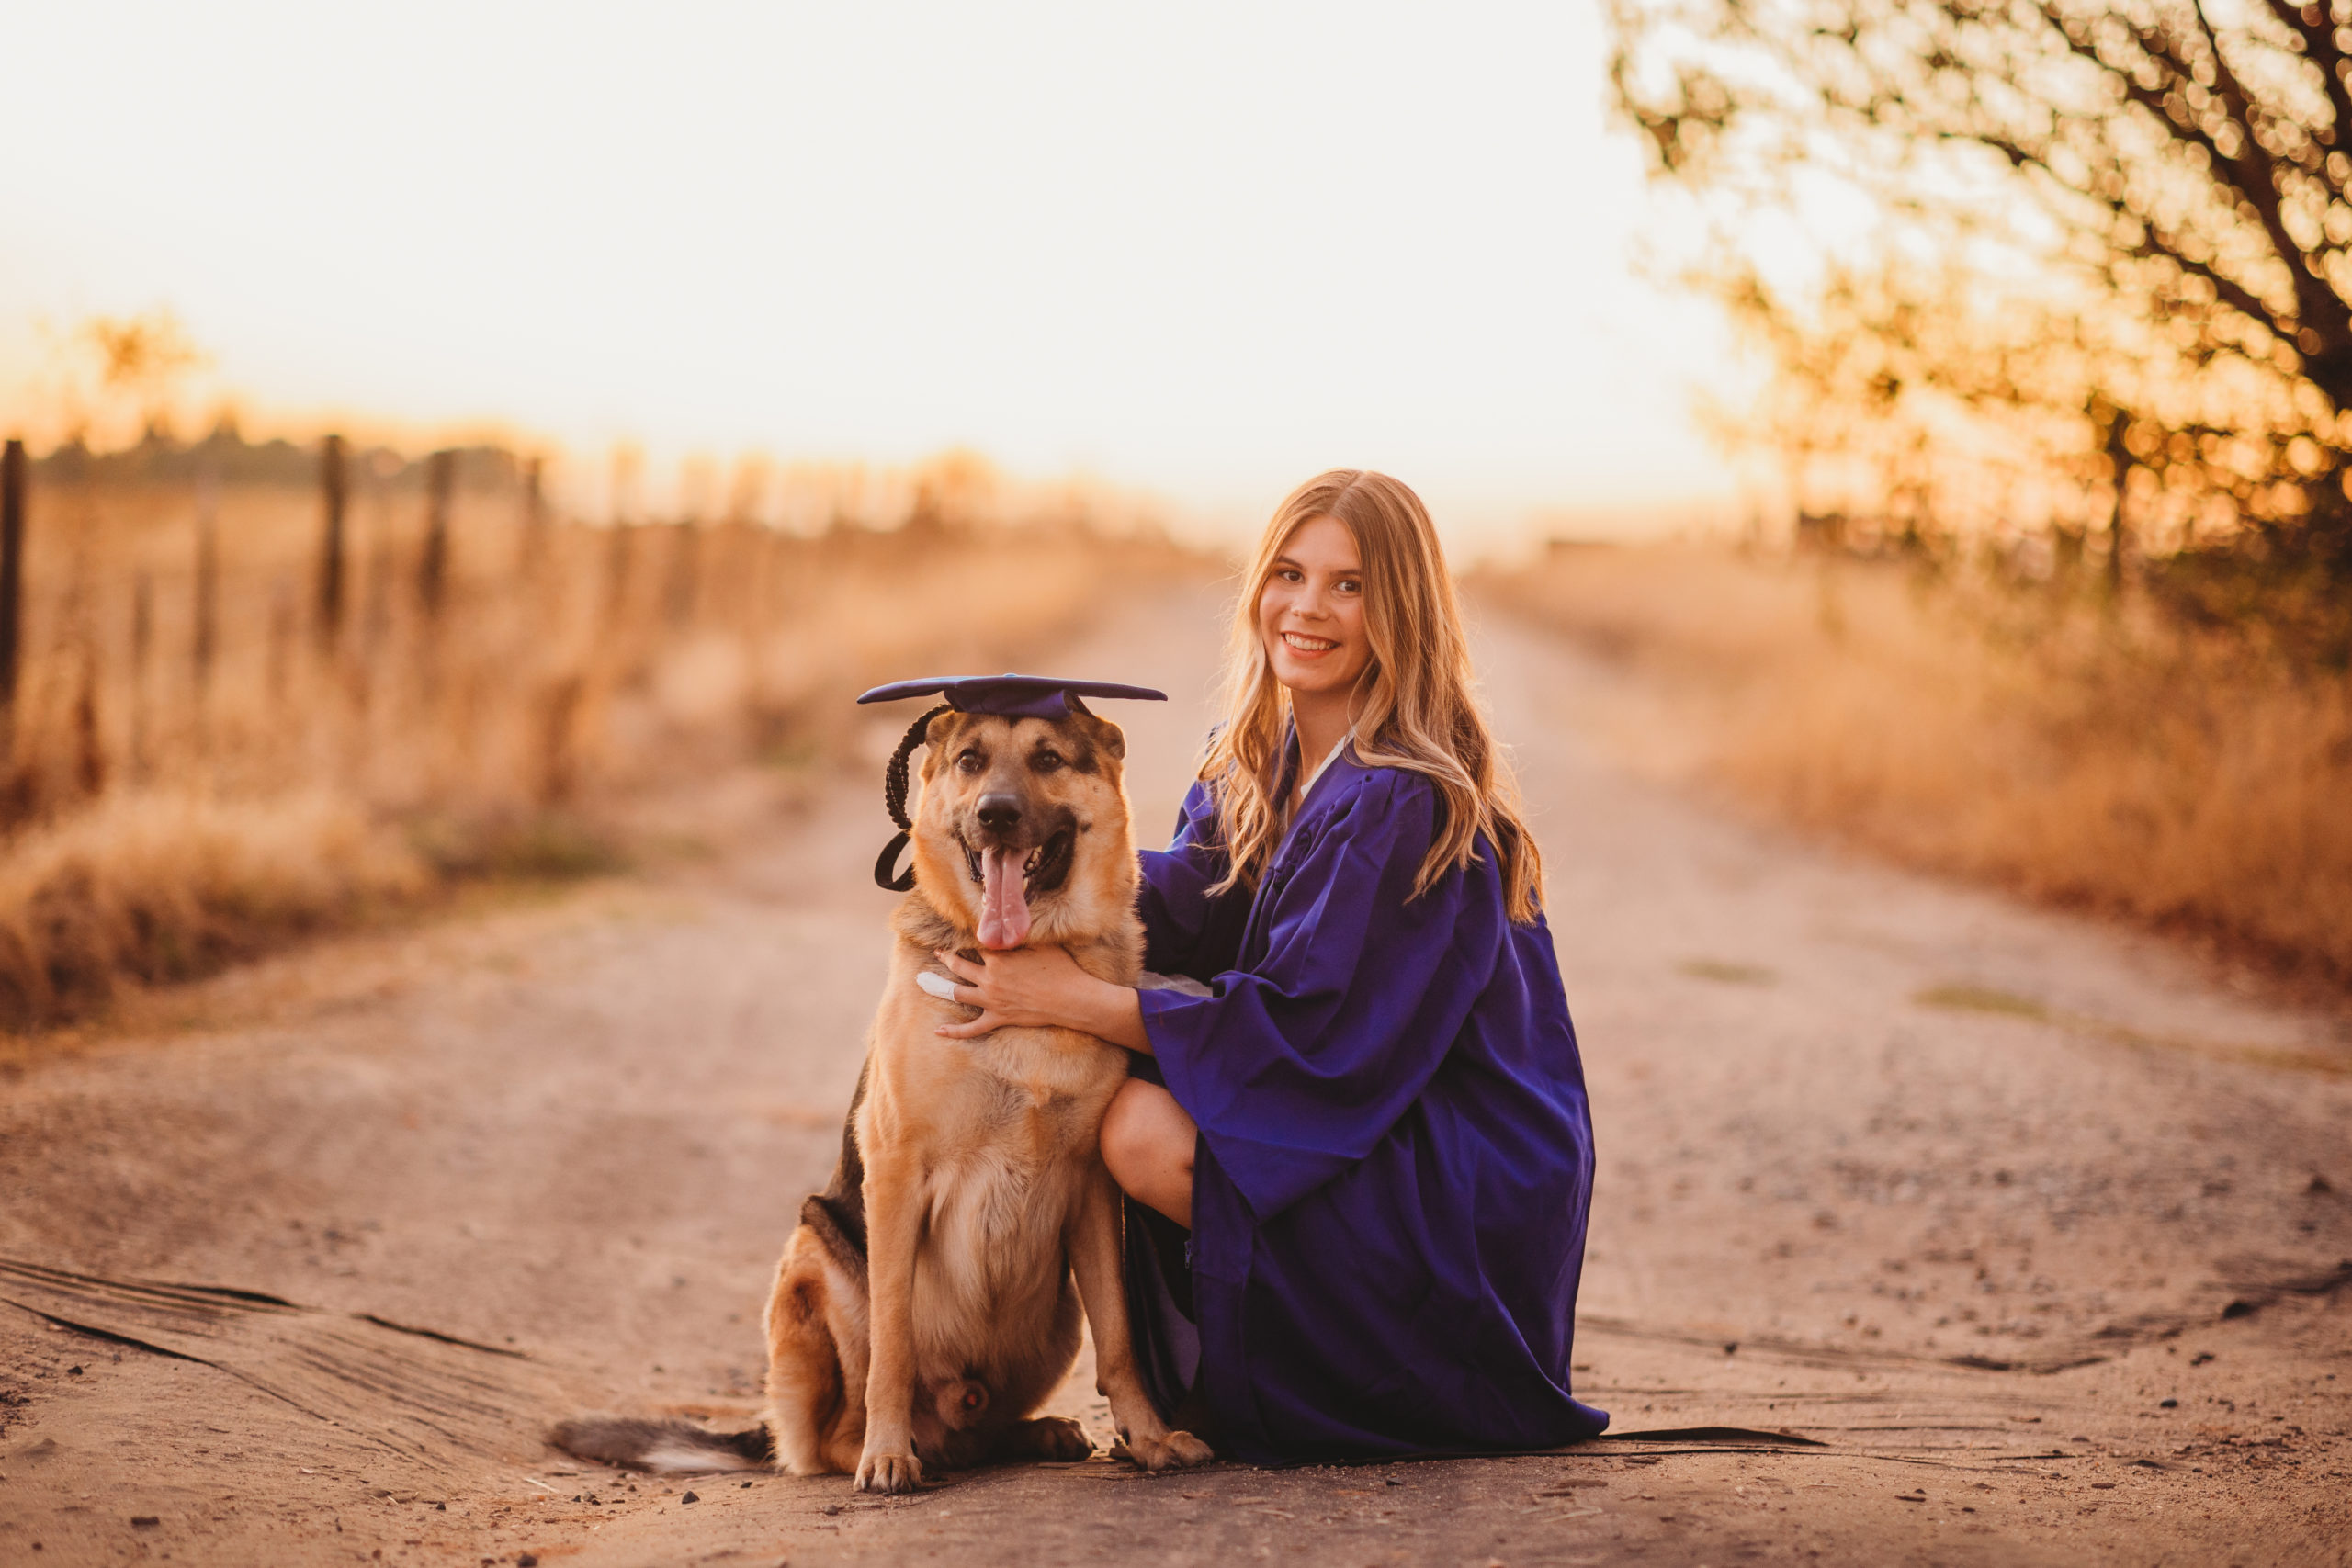 Senior photos with your dog